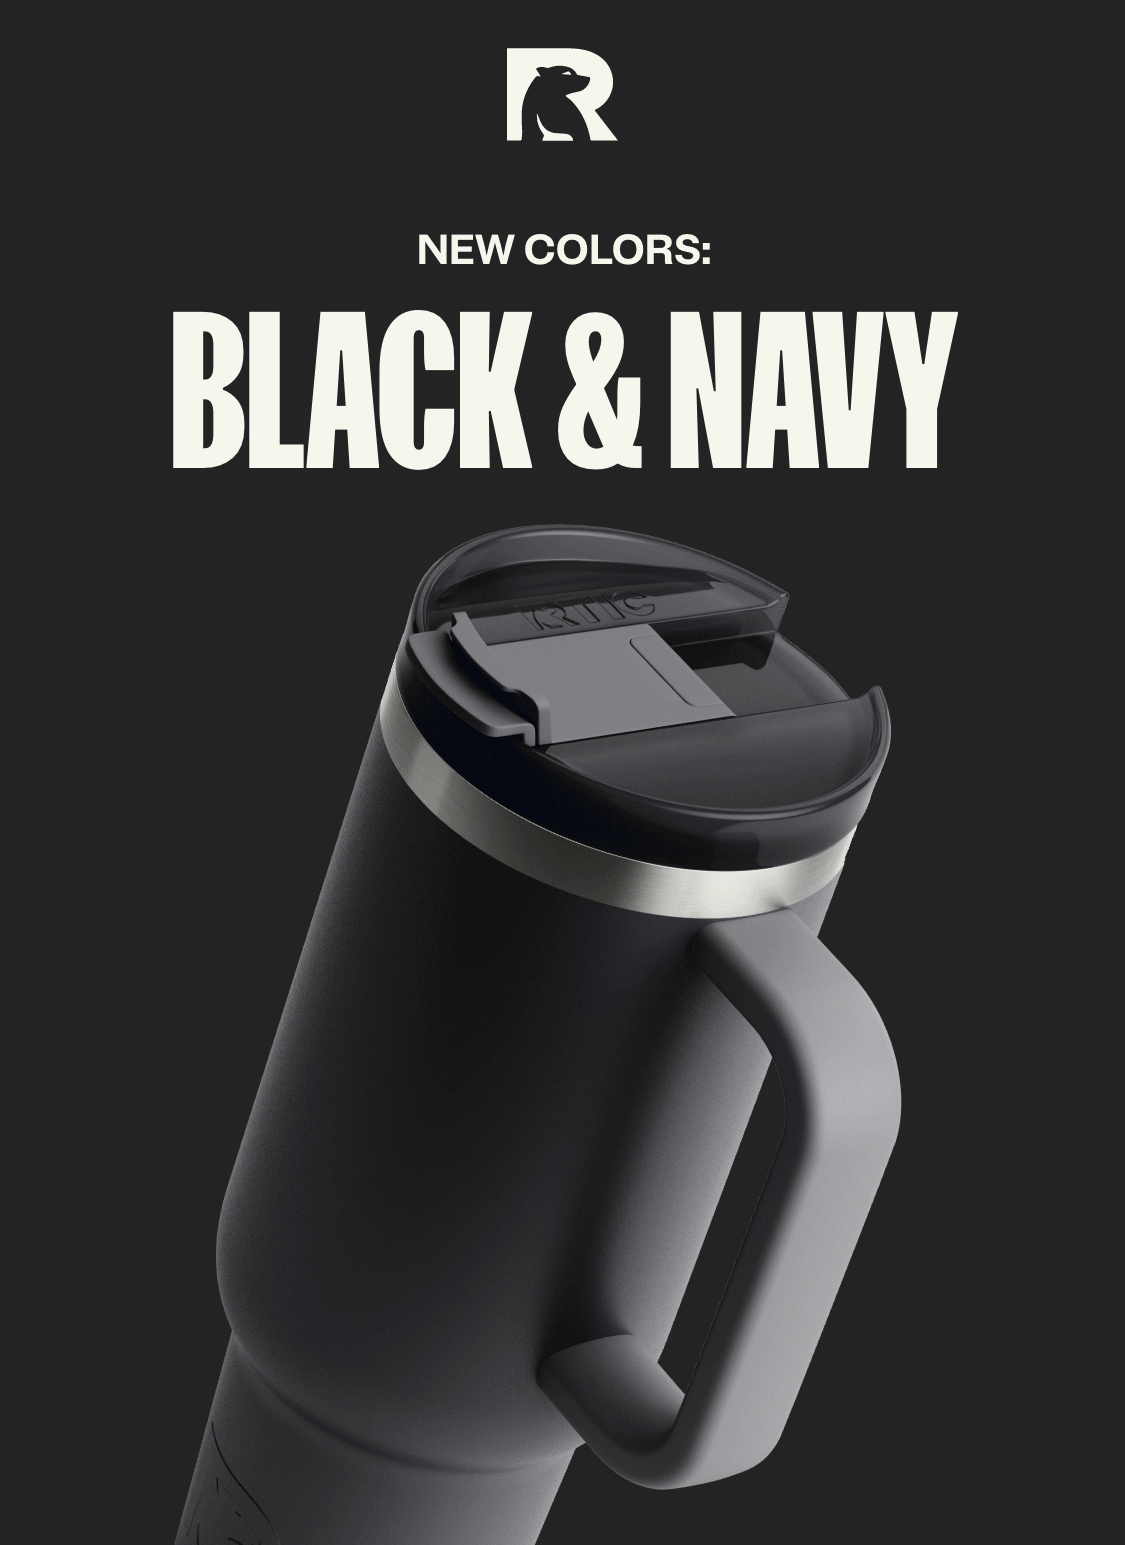 New Colors: Black & Navy